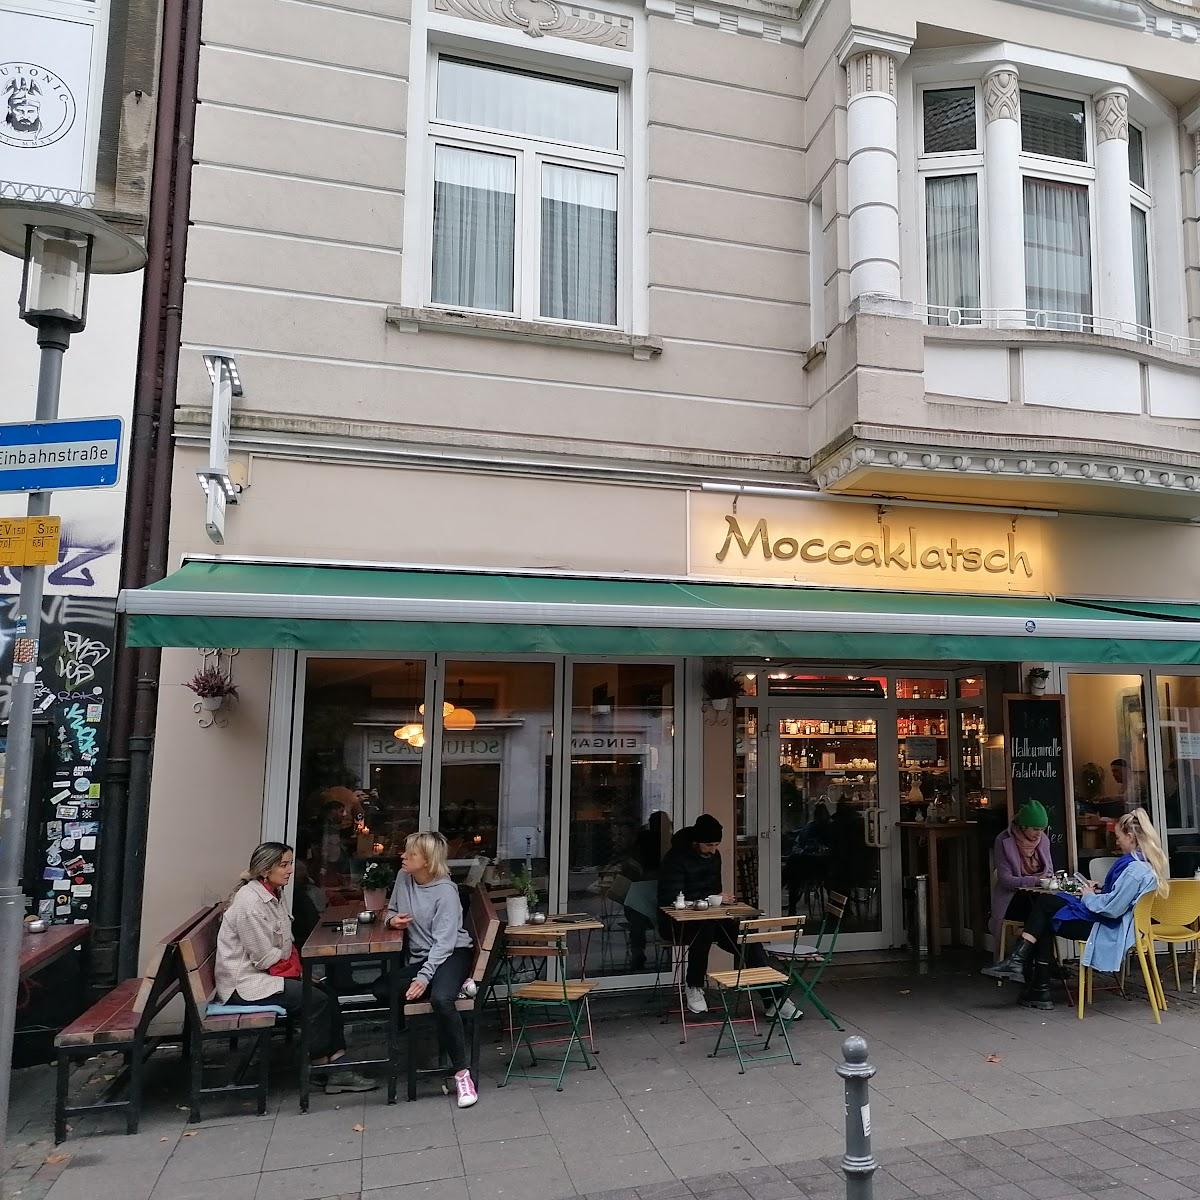 Restaurant "Moccaklatsch" in Bielefeld